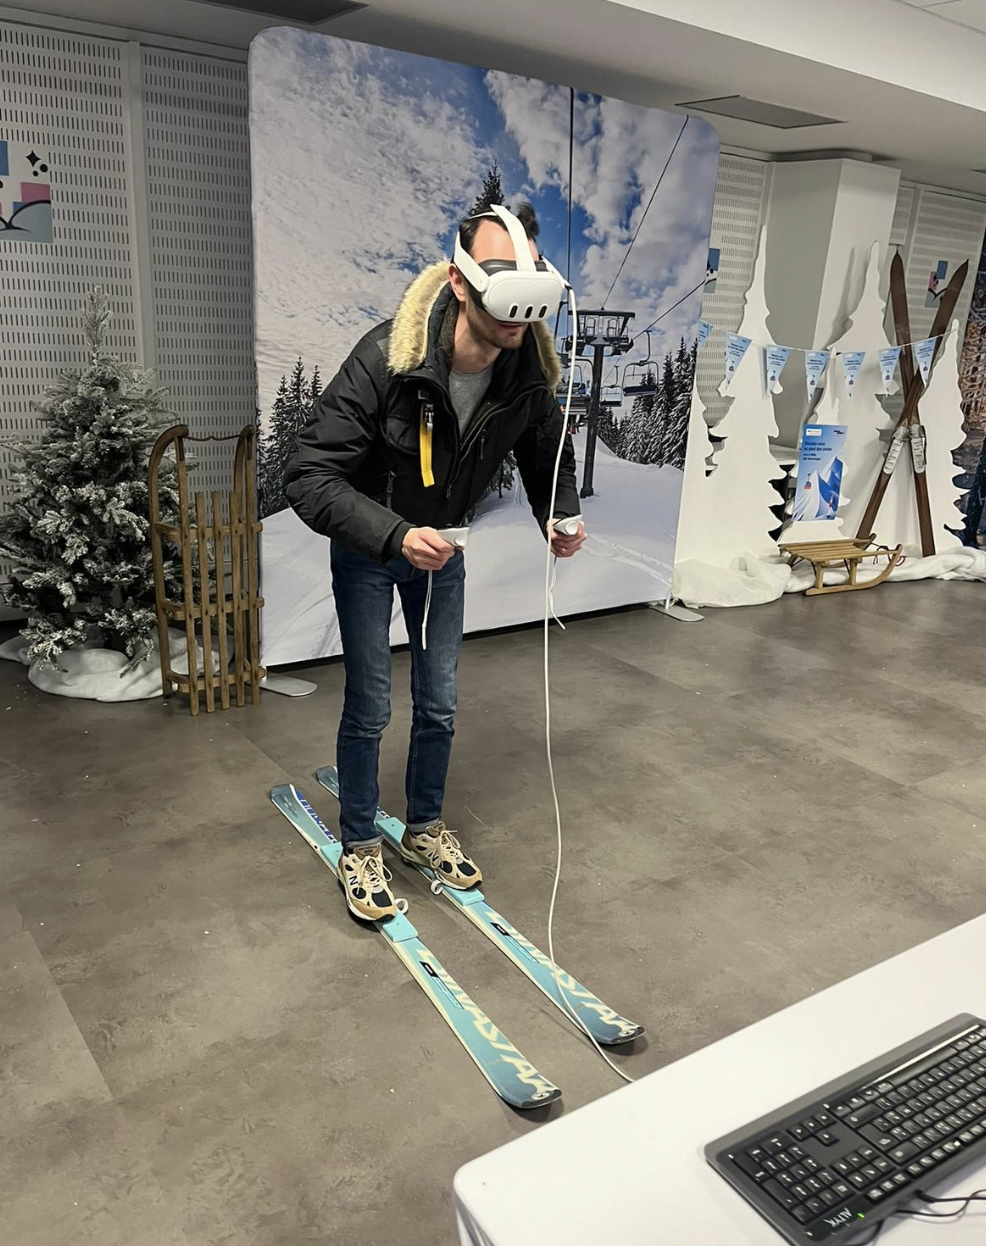 Simulateur de ski